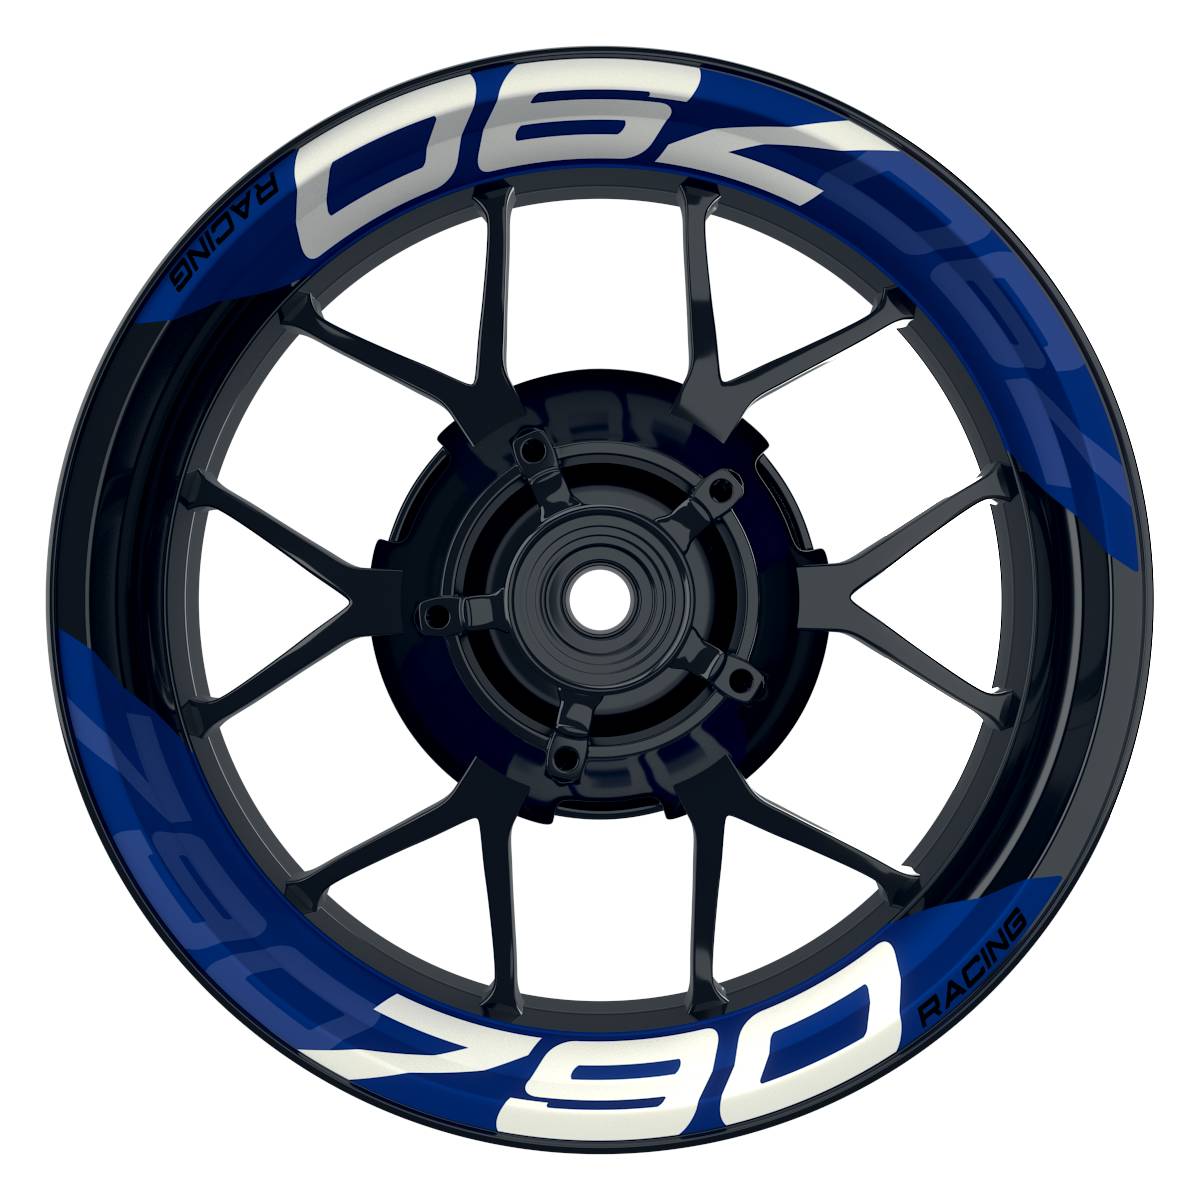 Wheelsticker Felgenaufkleber KTM Racing 790 einfarbig V2 blau Frontansicht